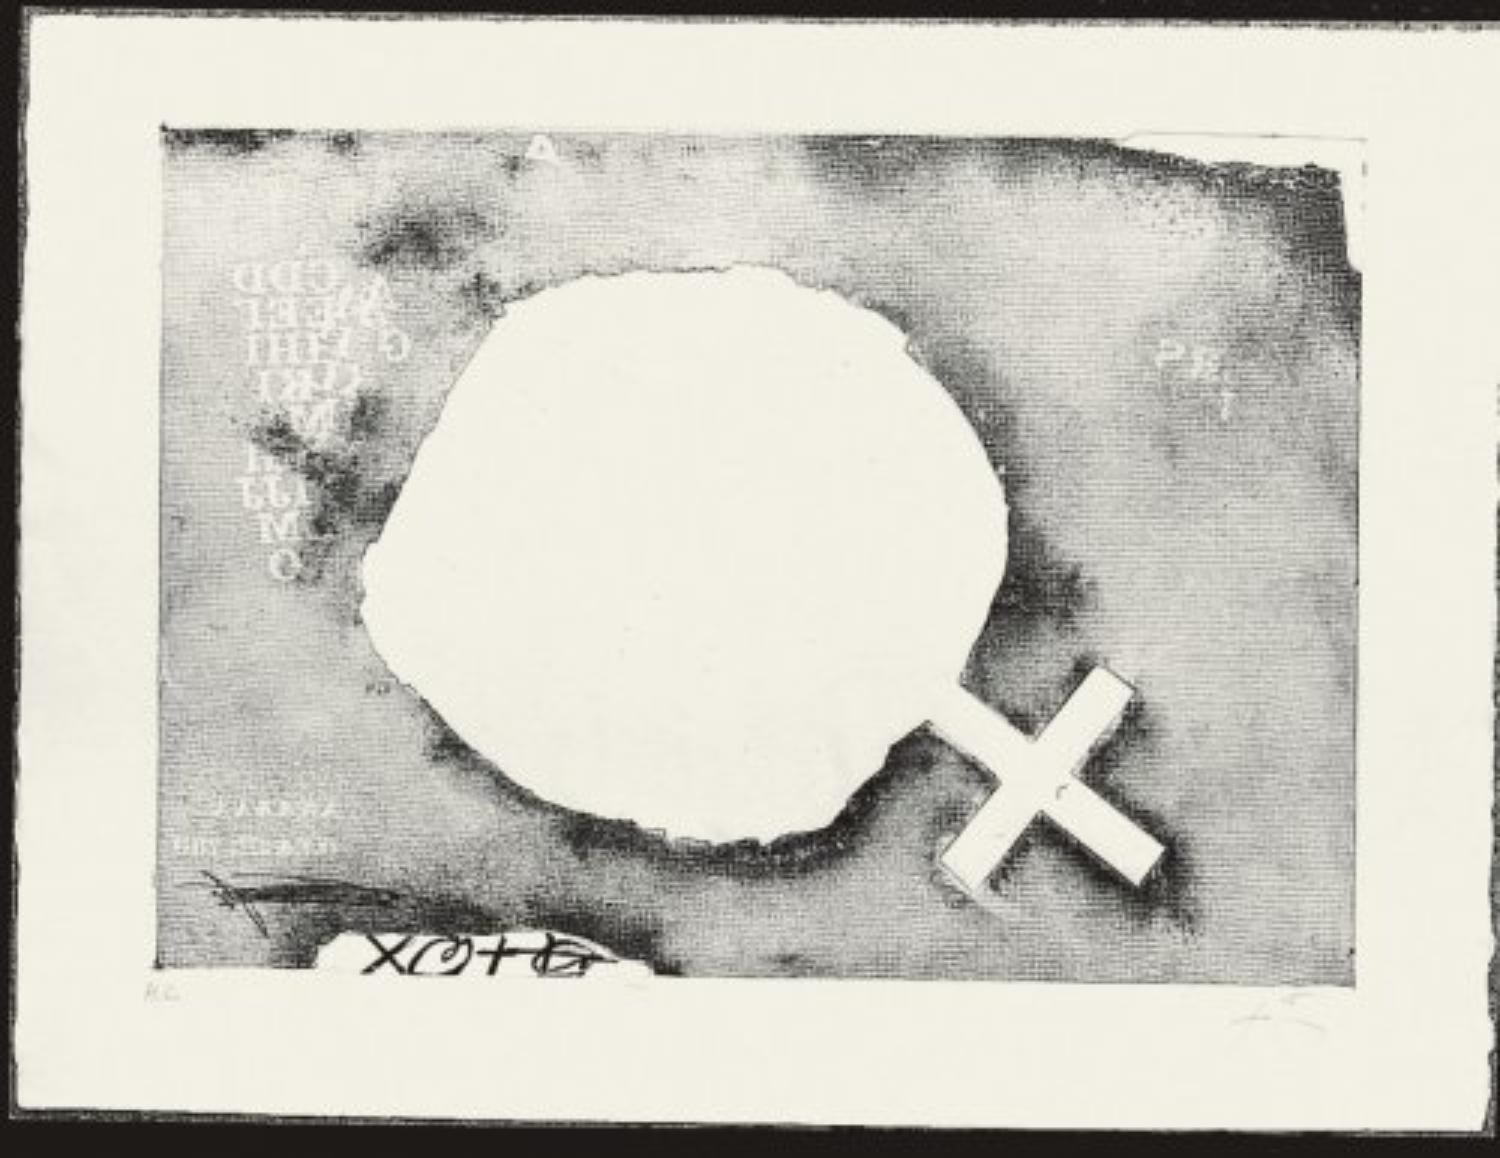 Paper Cremat - Print by Antoni Tàpies